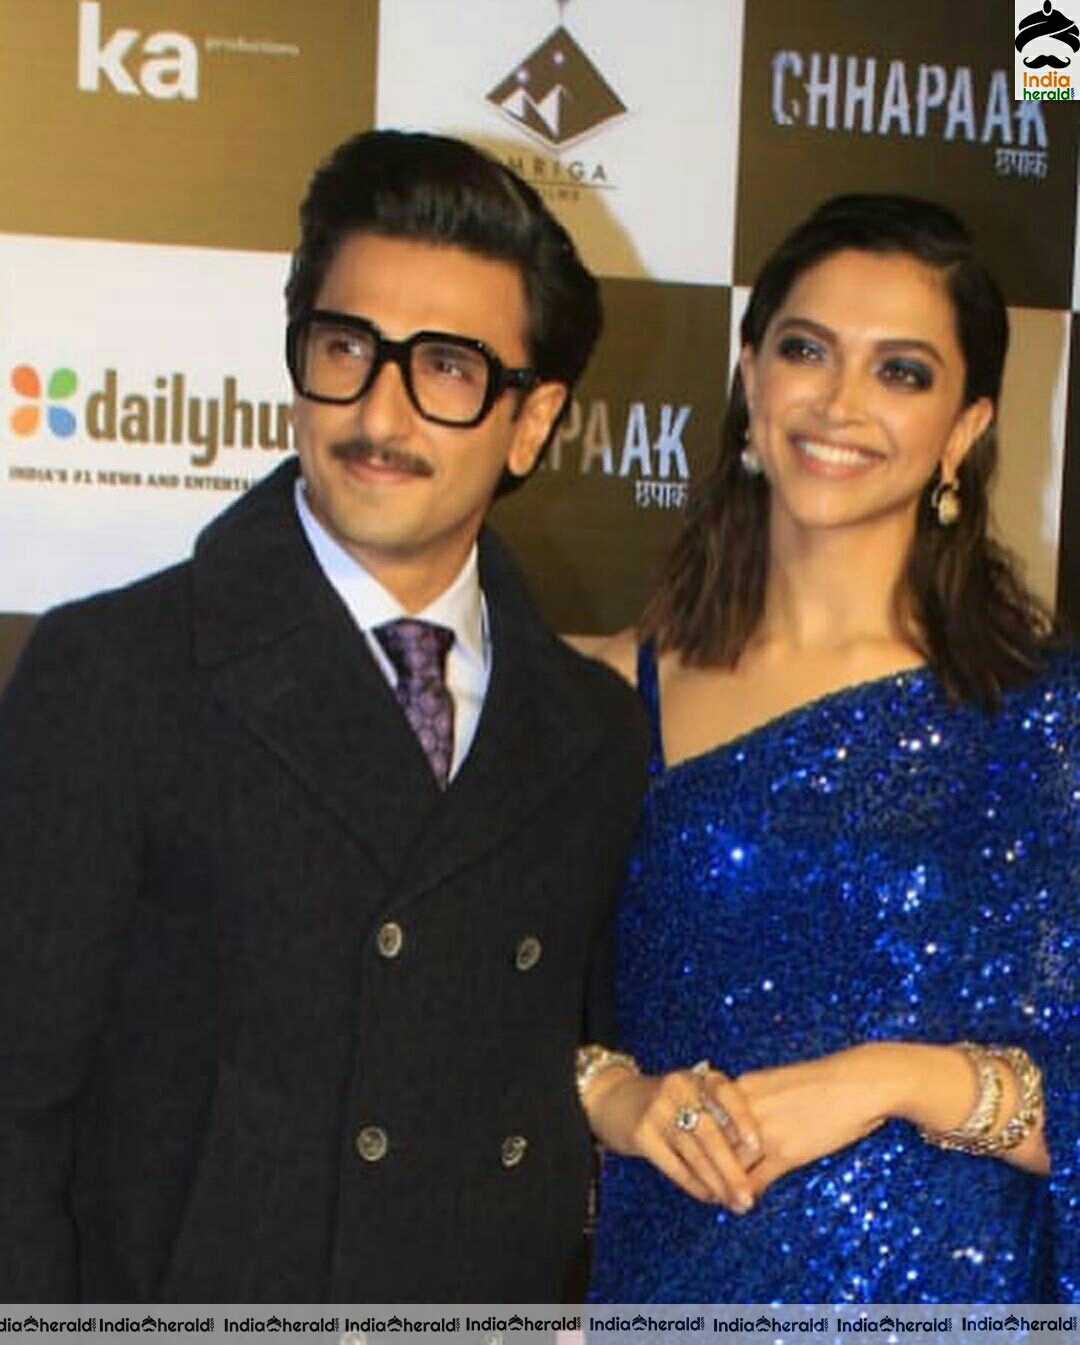 Deepika padukone Cute In Blue Saree With Her Husband